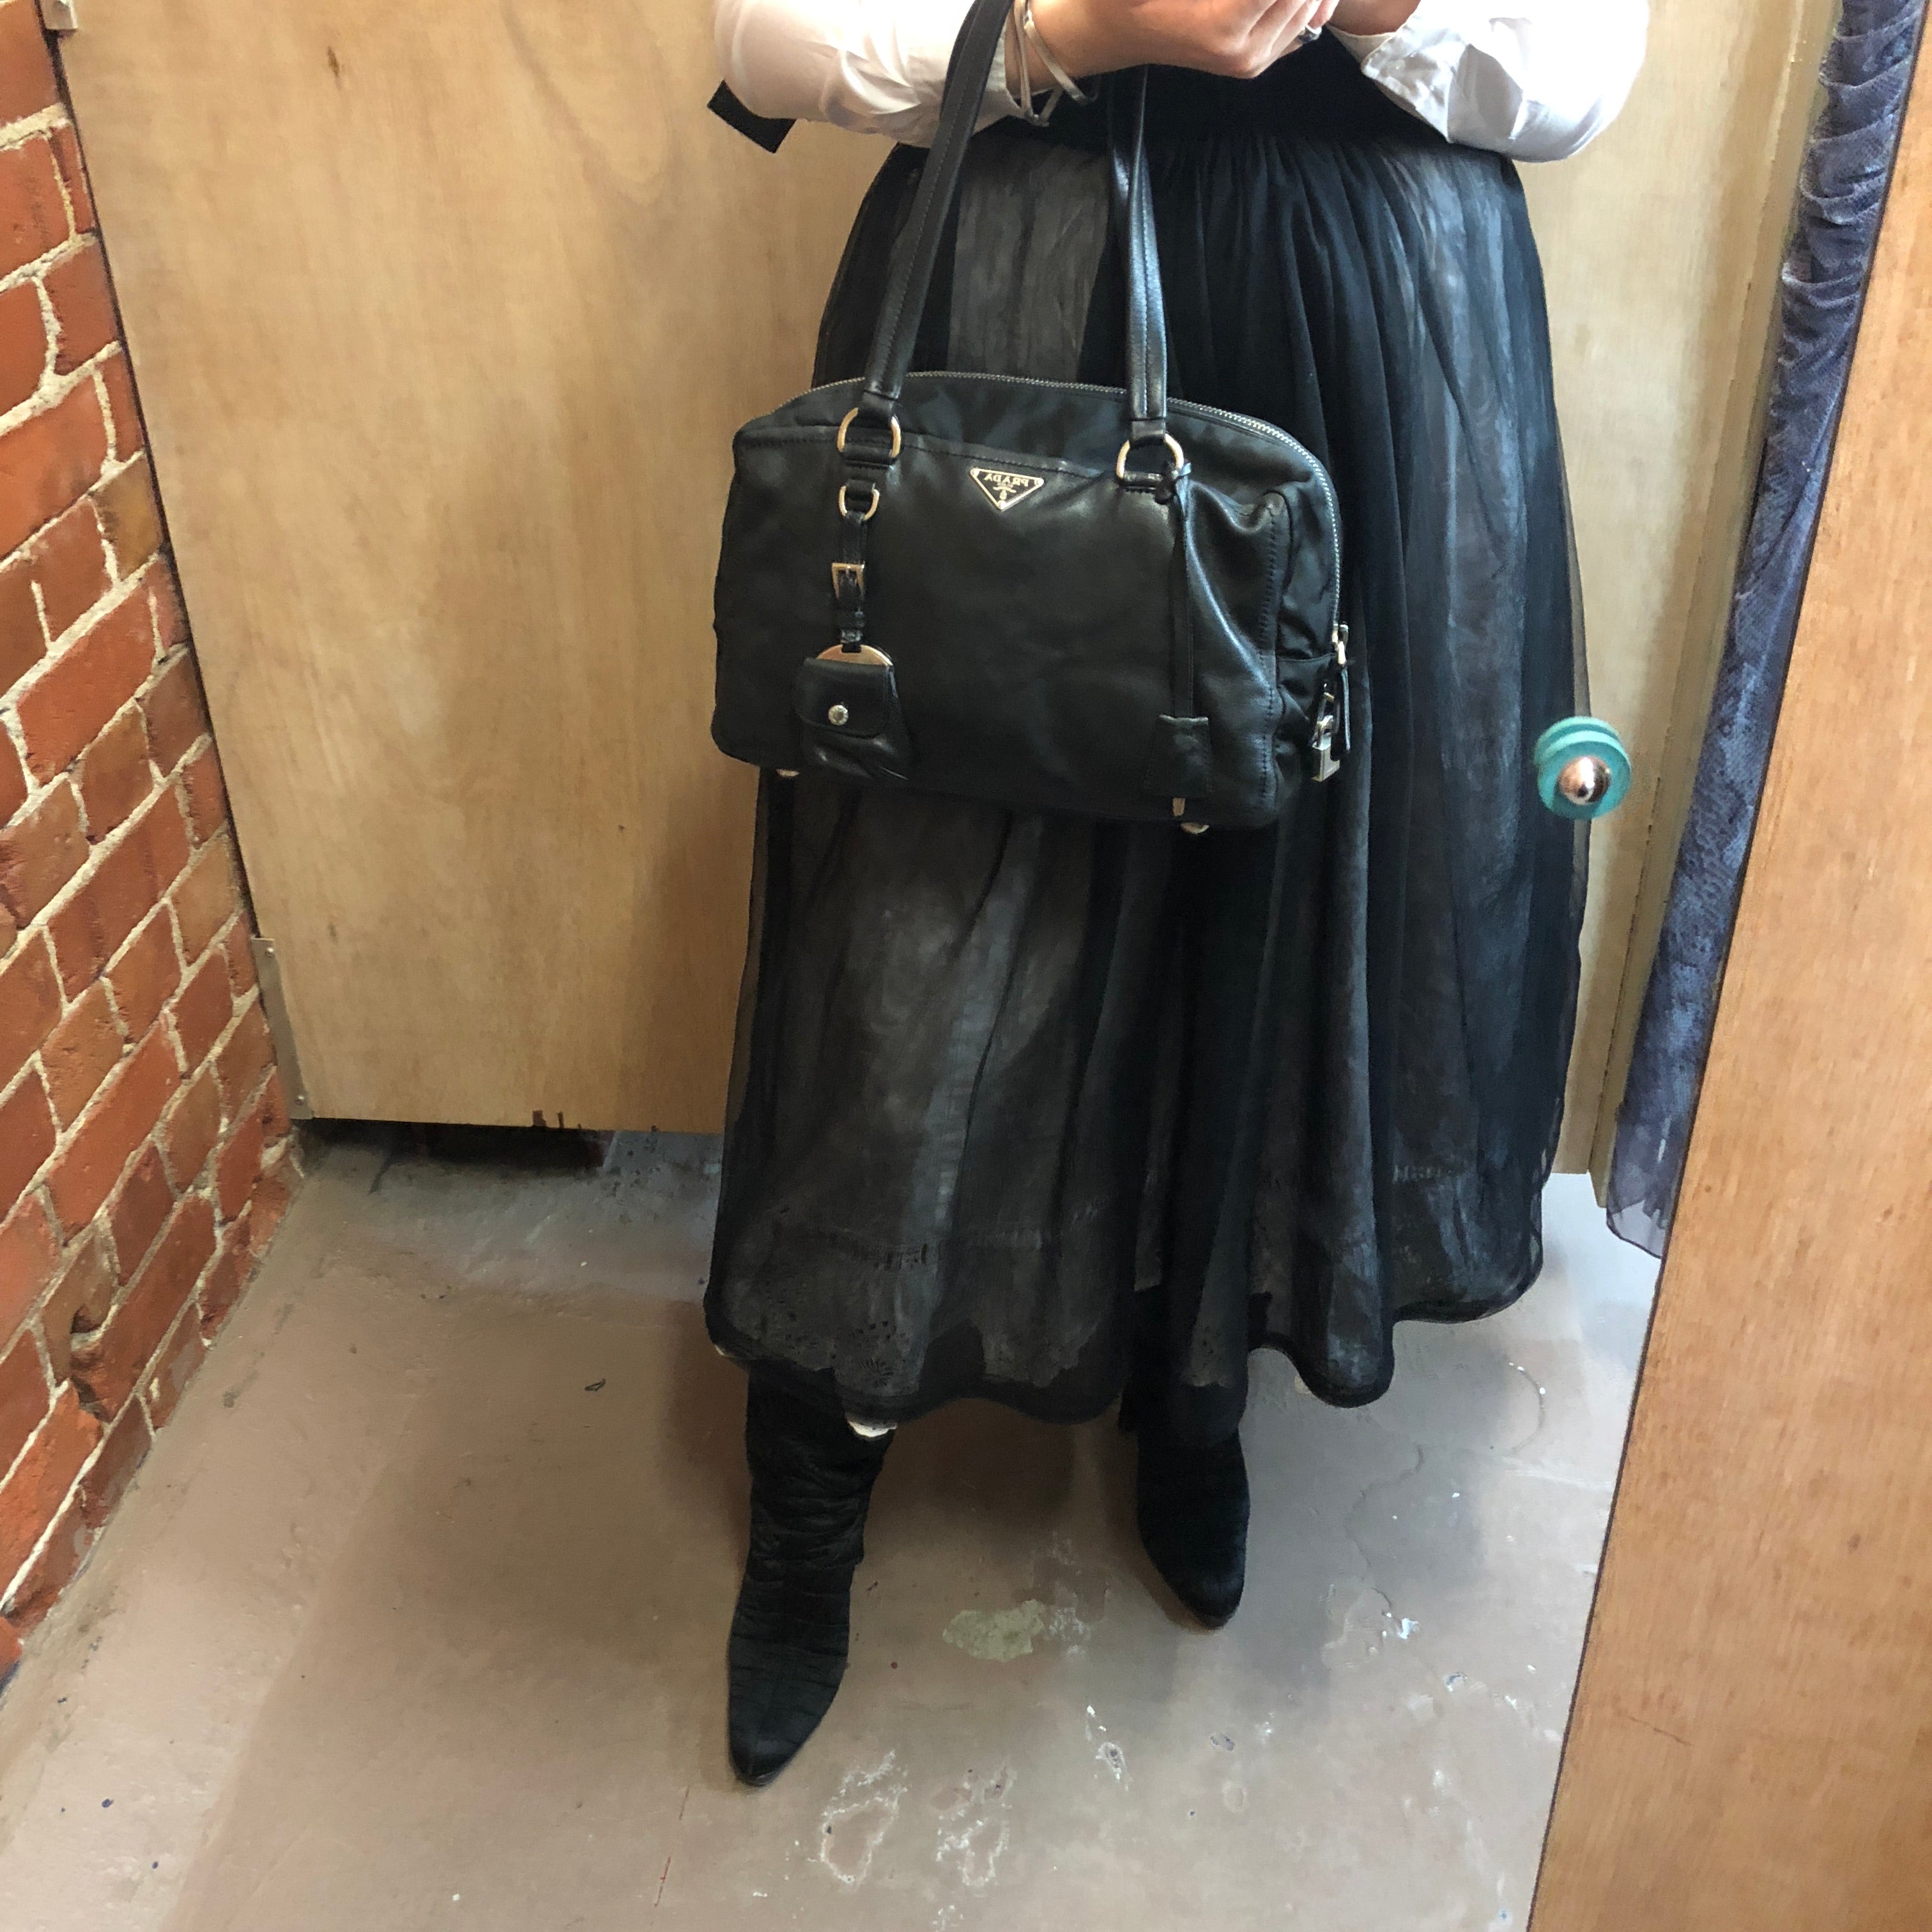 PRADA leather handbag